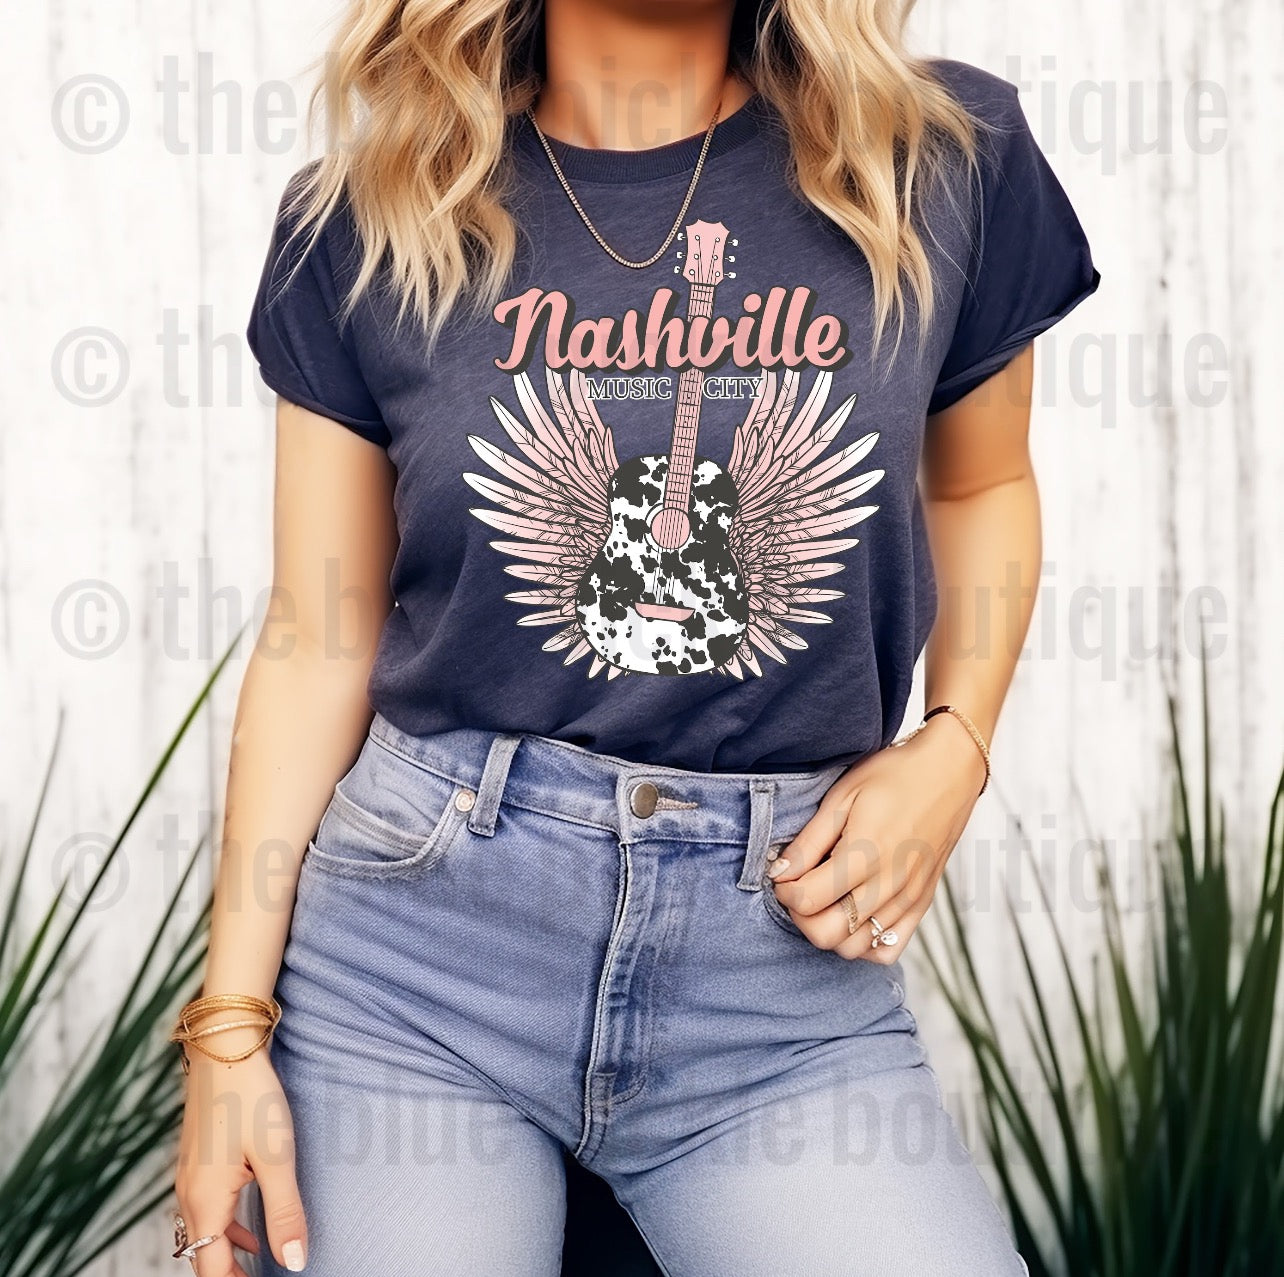 Nashville Music City